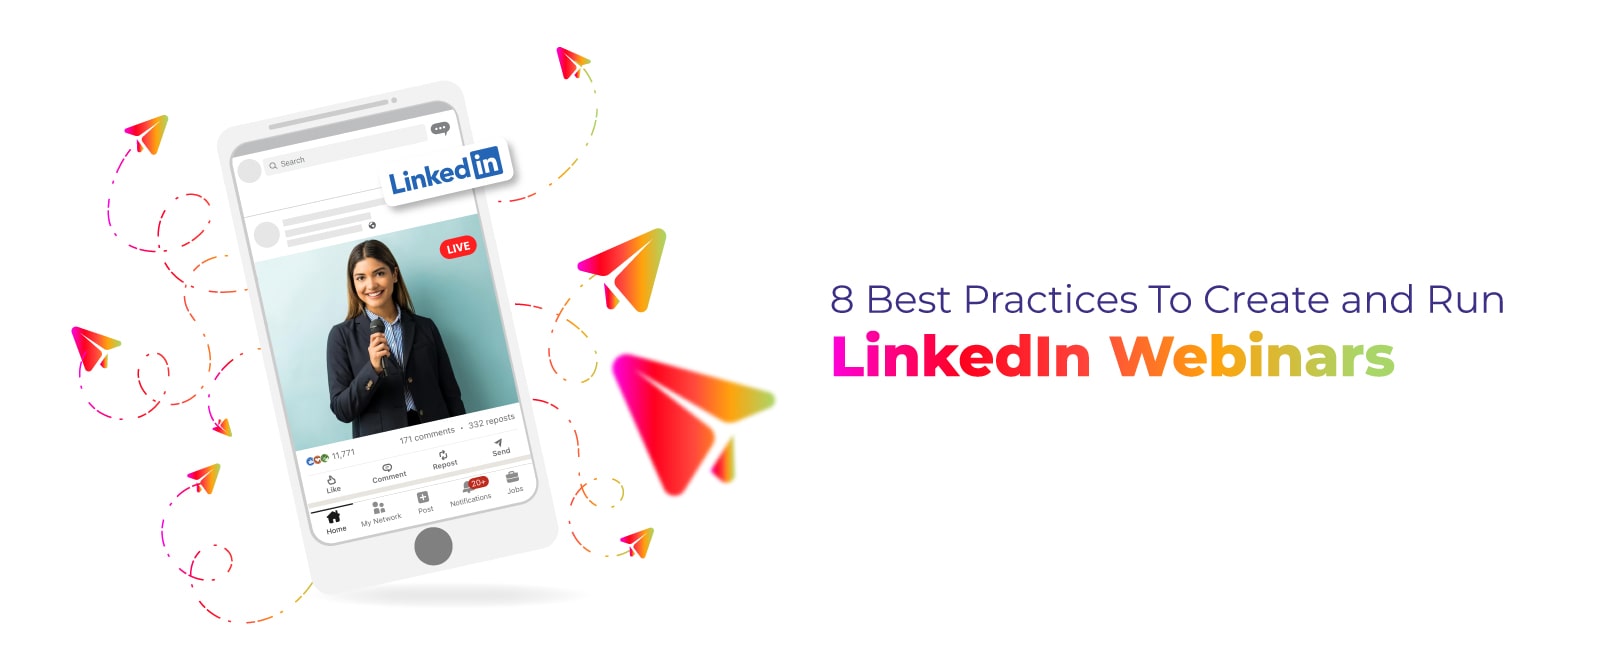 8 Best Practices To Create and Run LinkedIn Webinars